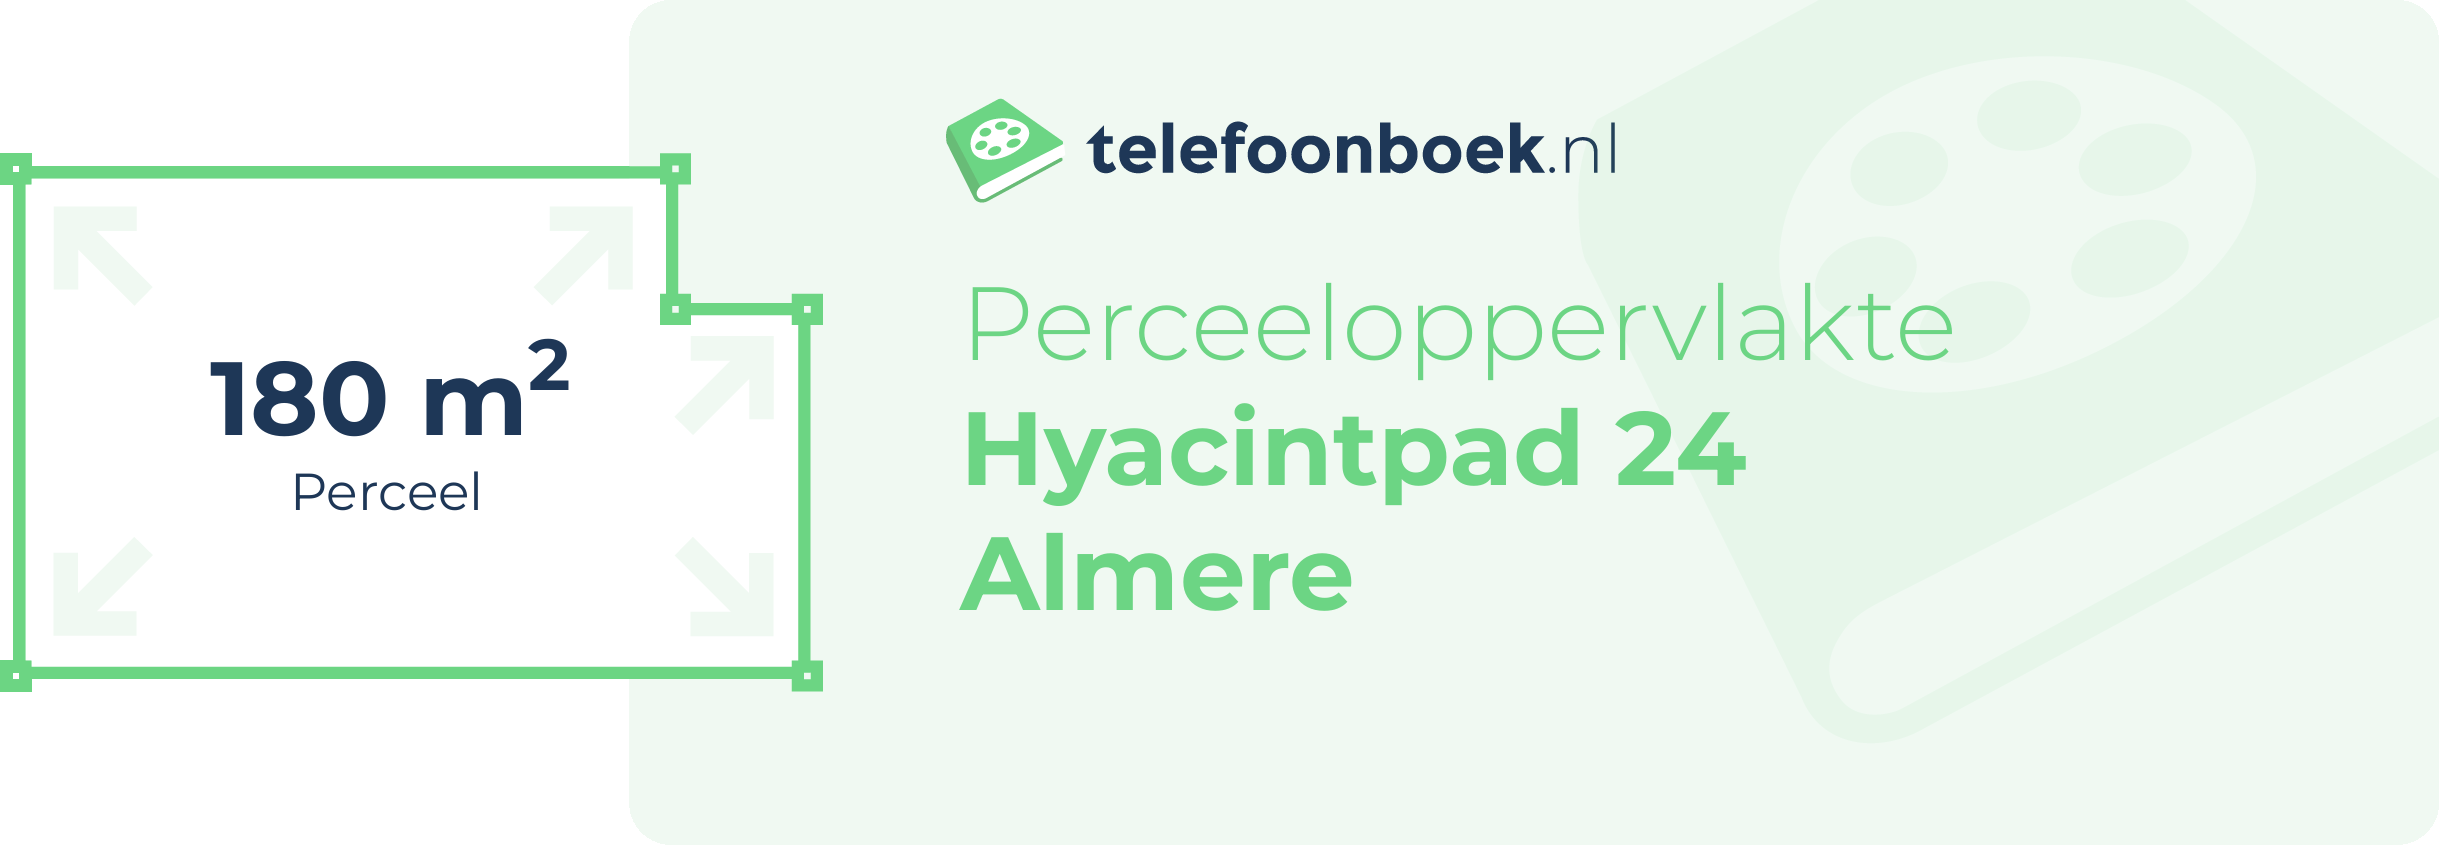 Perceeloppervlakte Hyacintpad 24 Almere